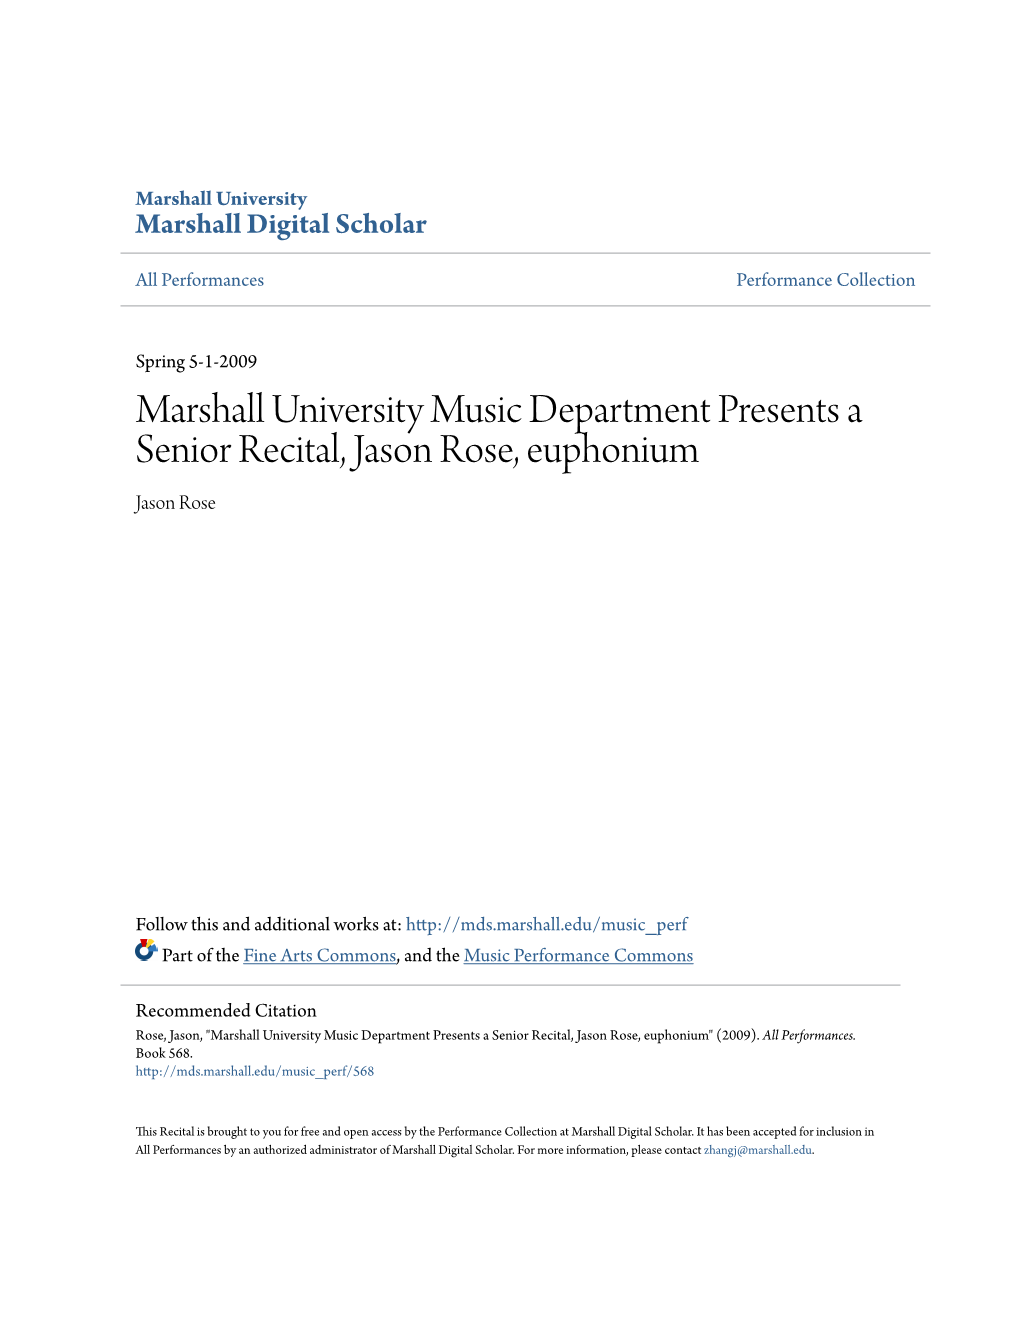 Marshall University Music Department Presents a Senior Recital, Jason Rose, Euphonium Jason Rose